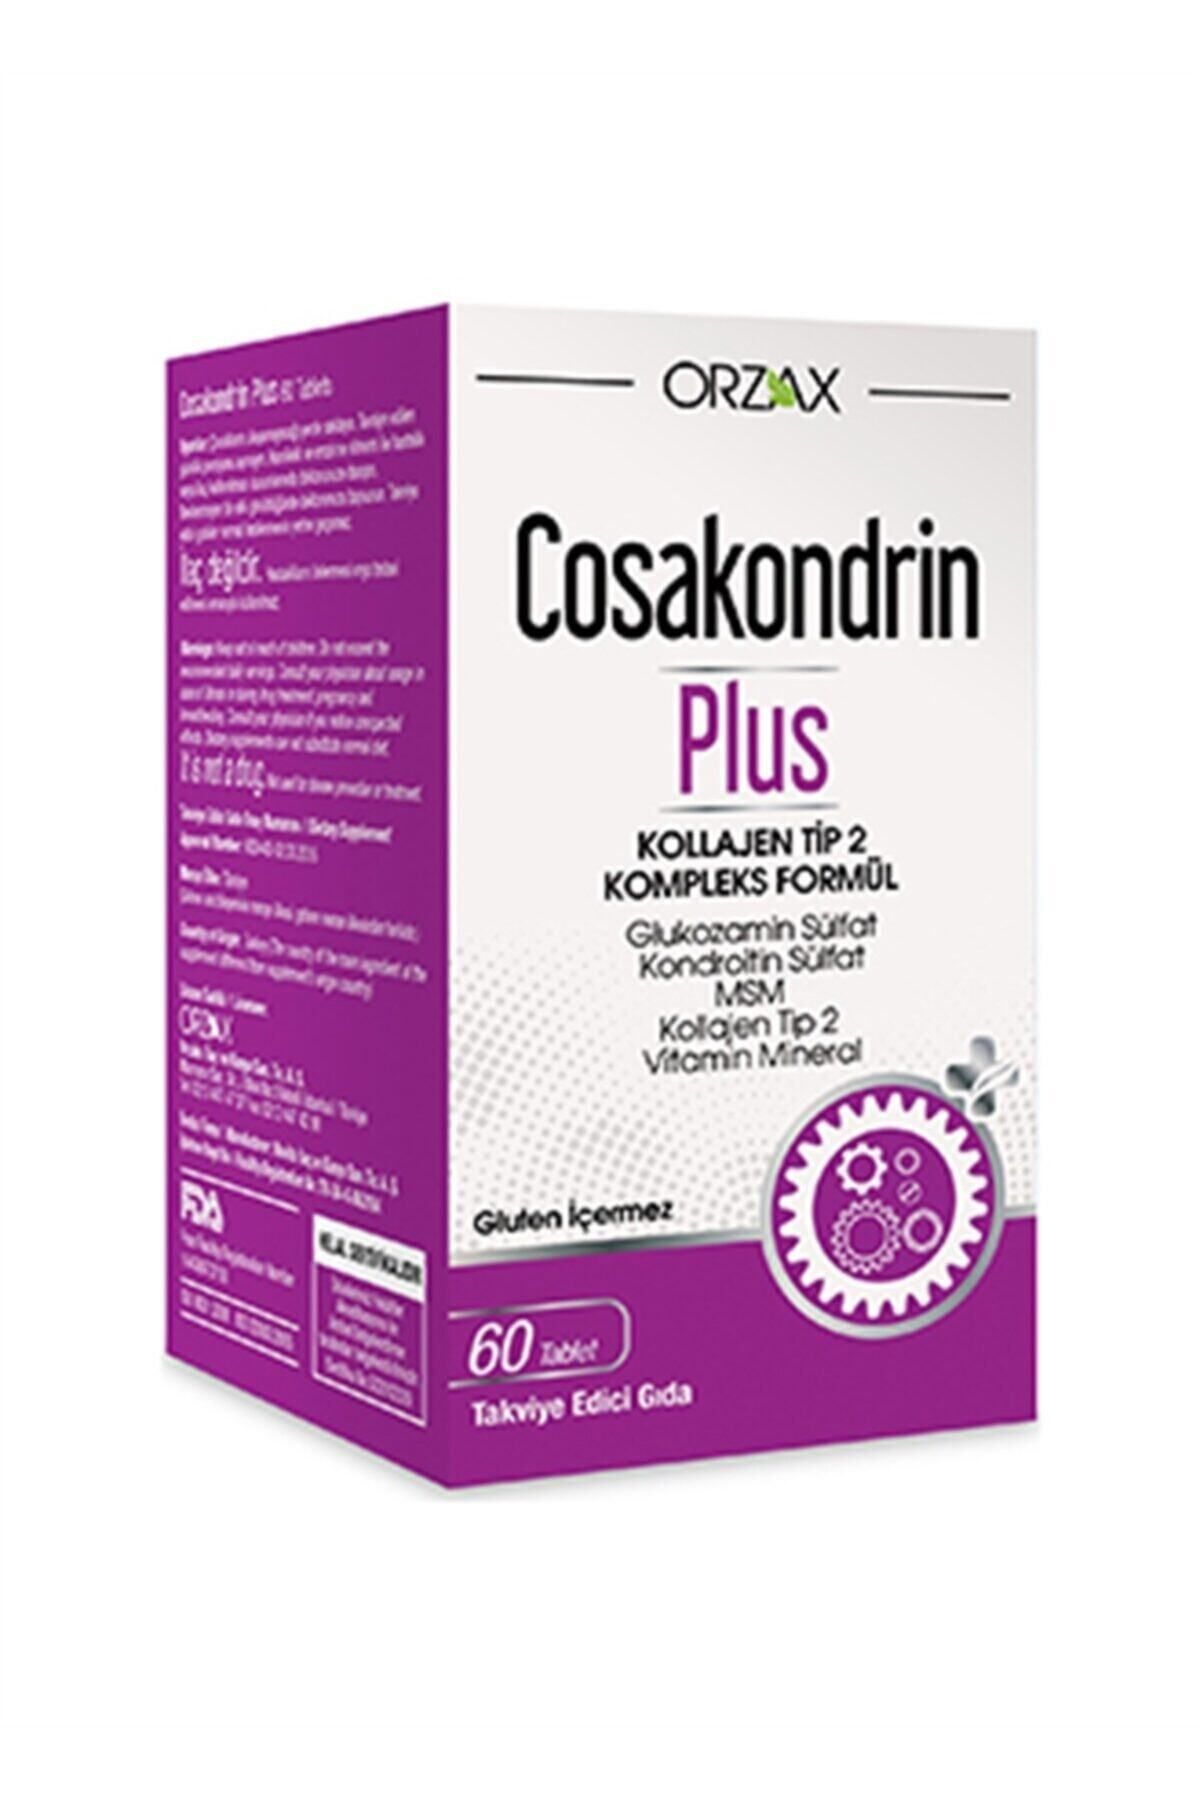 Cosakondrin Cosacondrin Plus 60 Tablet